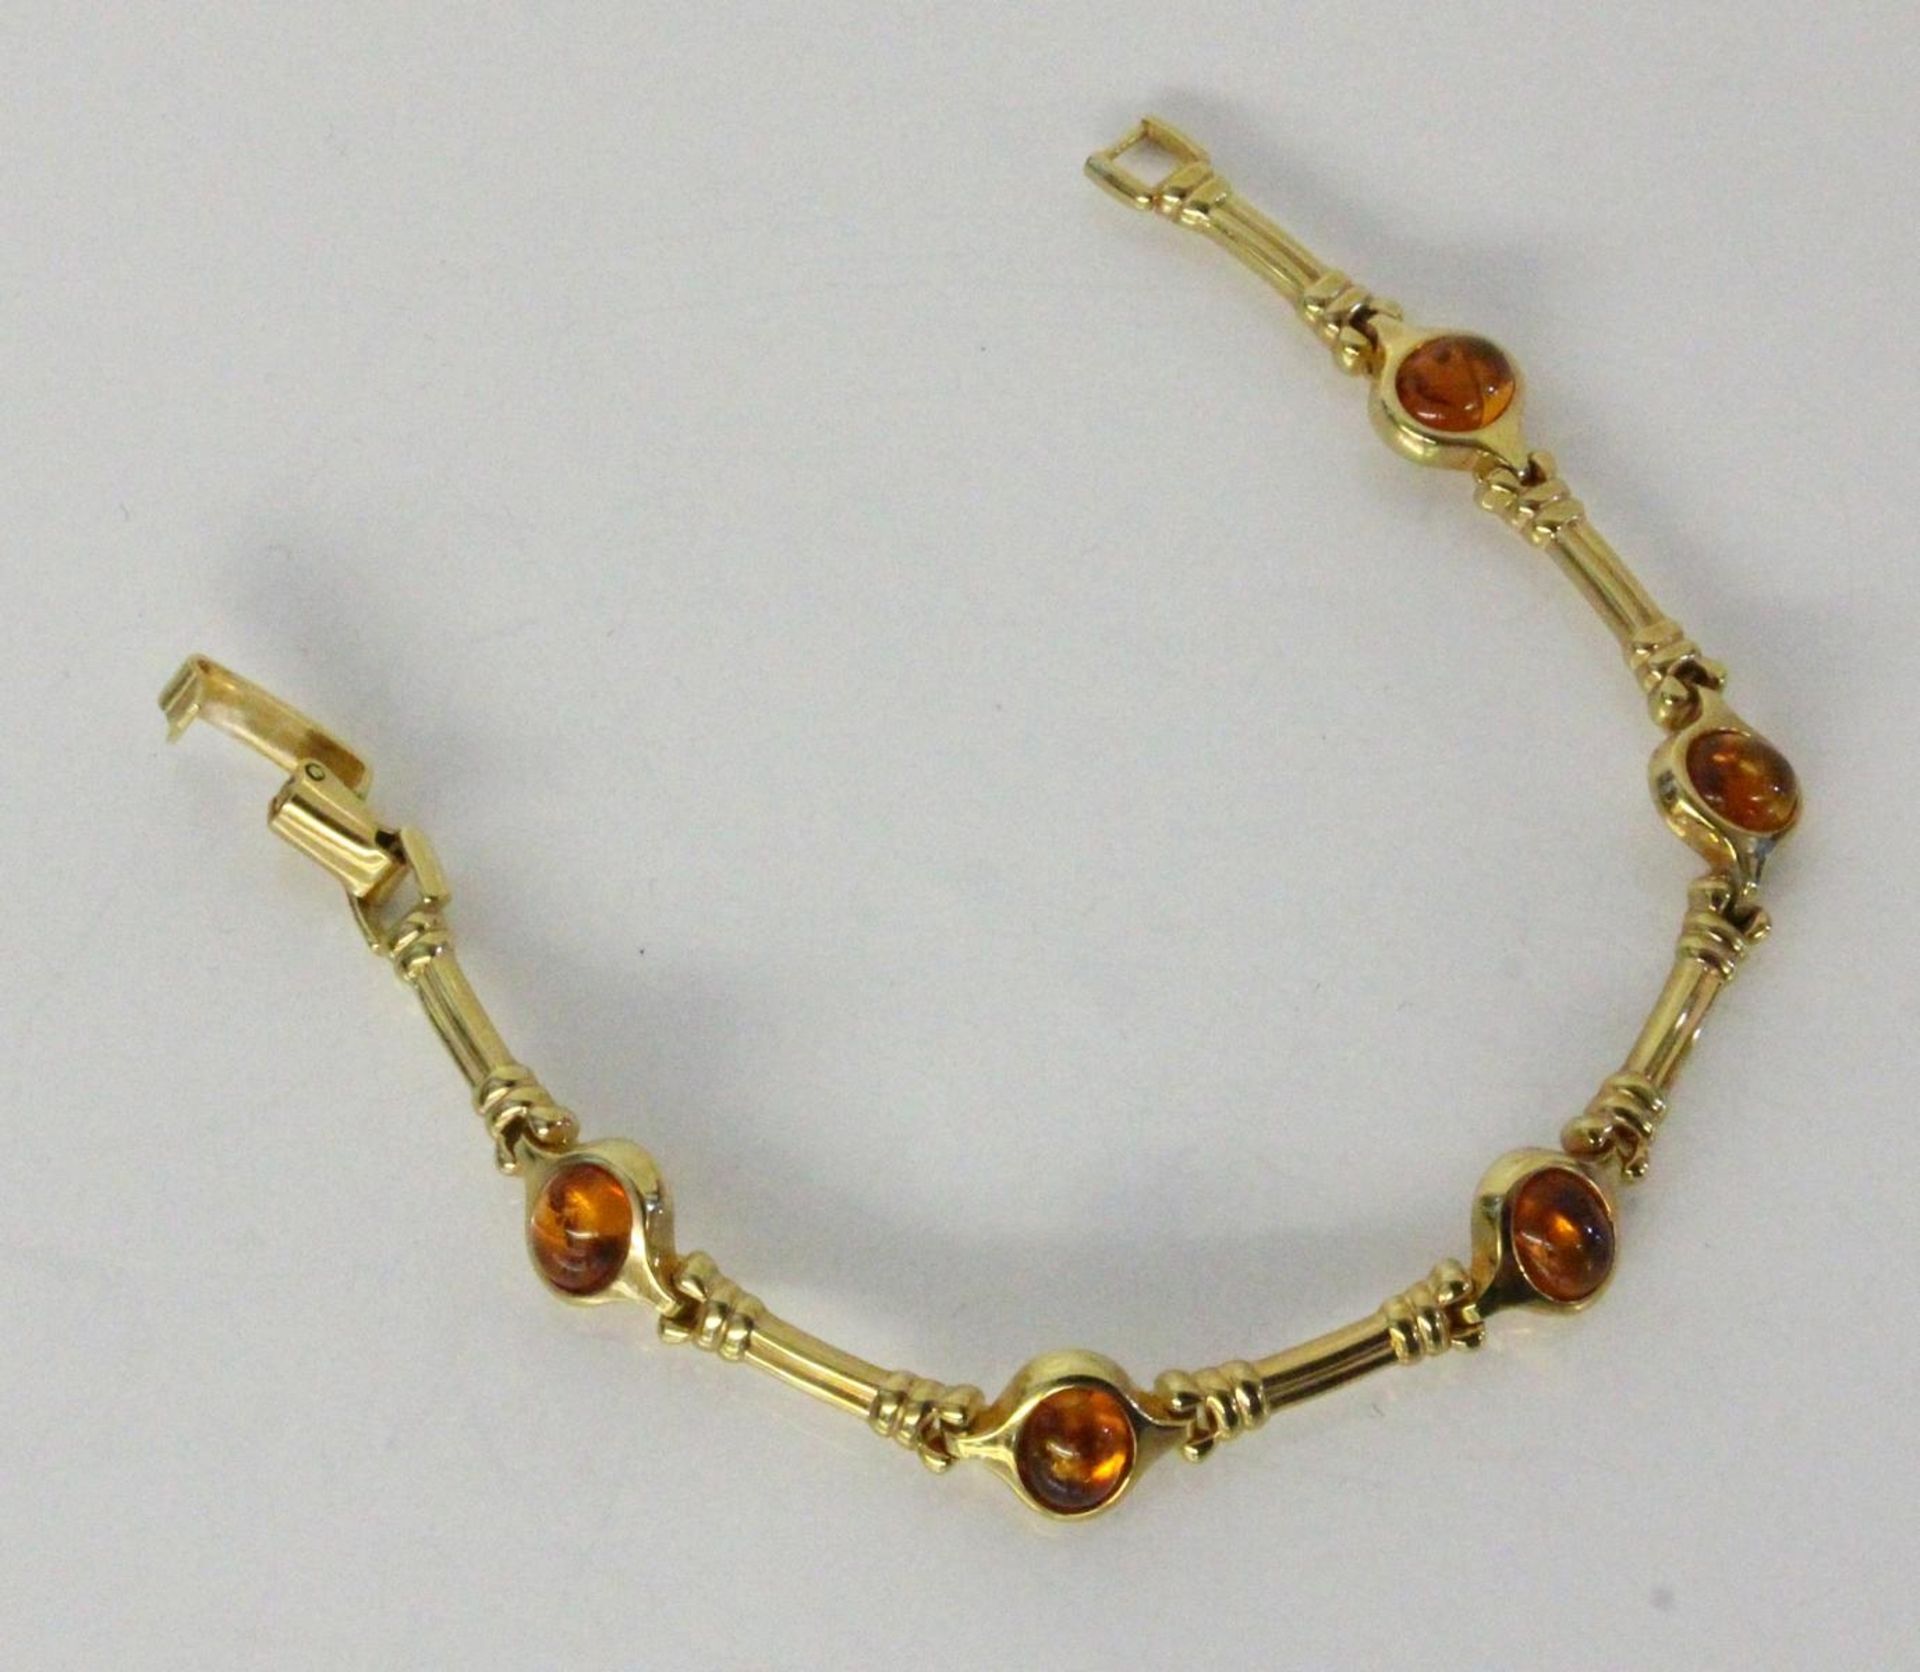 ARMBANDDoublé mit Bernsteinen. L.15cmA BRACELET Rolled gold with ambers. 15 cm long. Keywords: